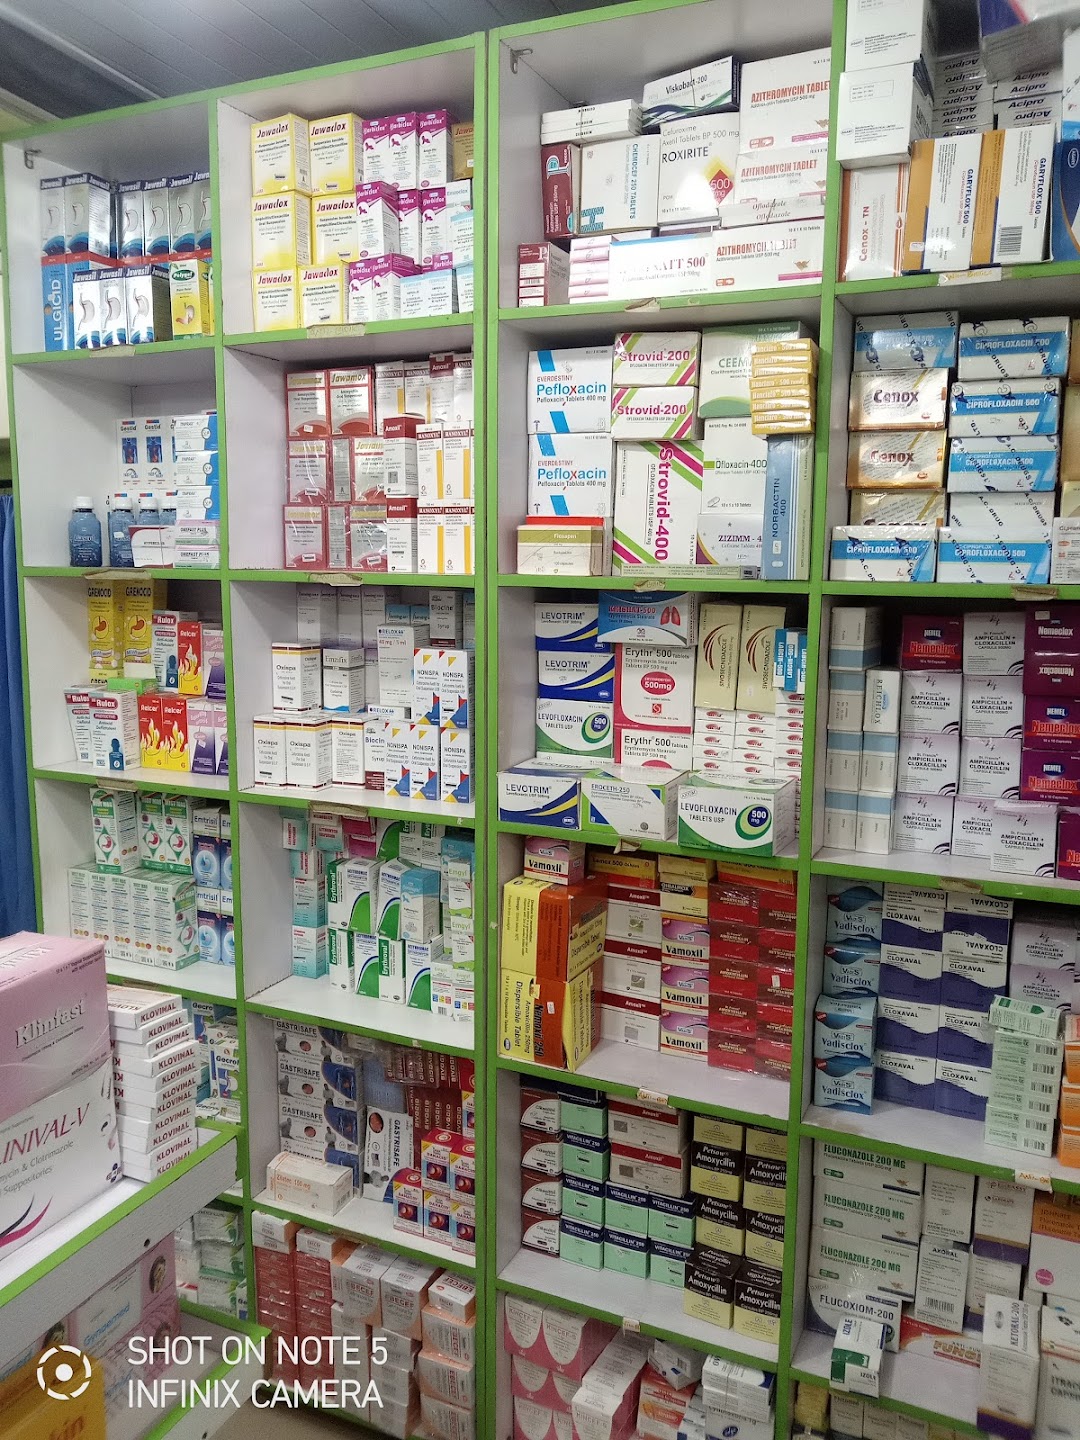 Kichnod Pharmacy and Store Ltd